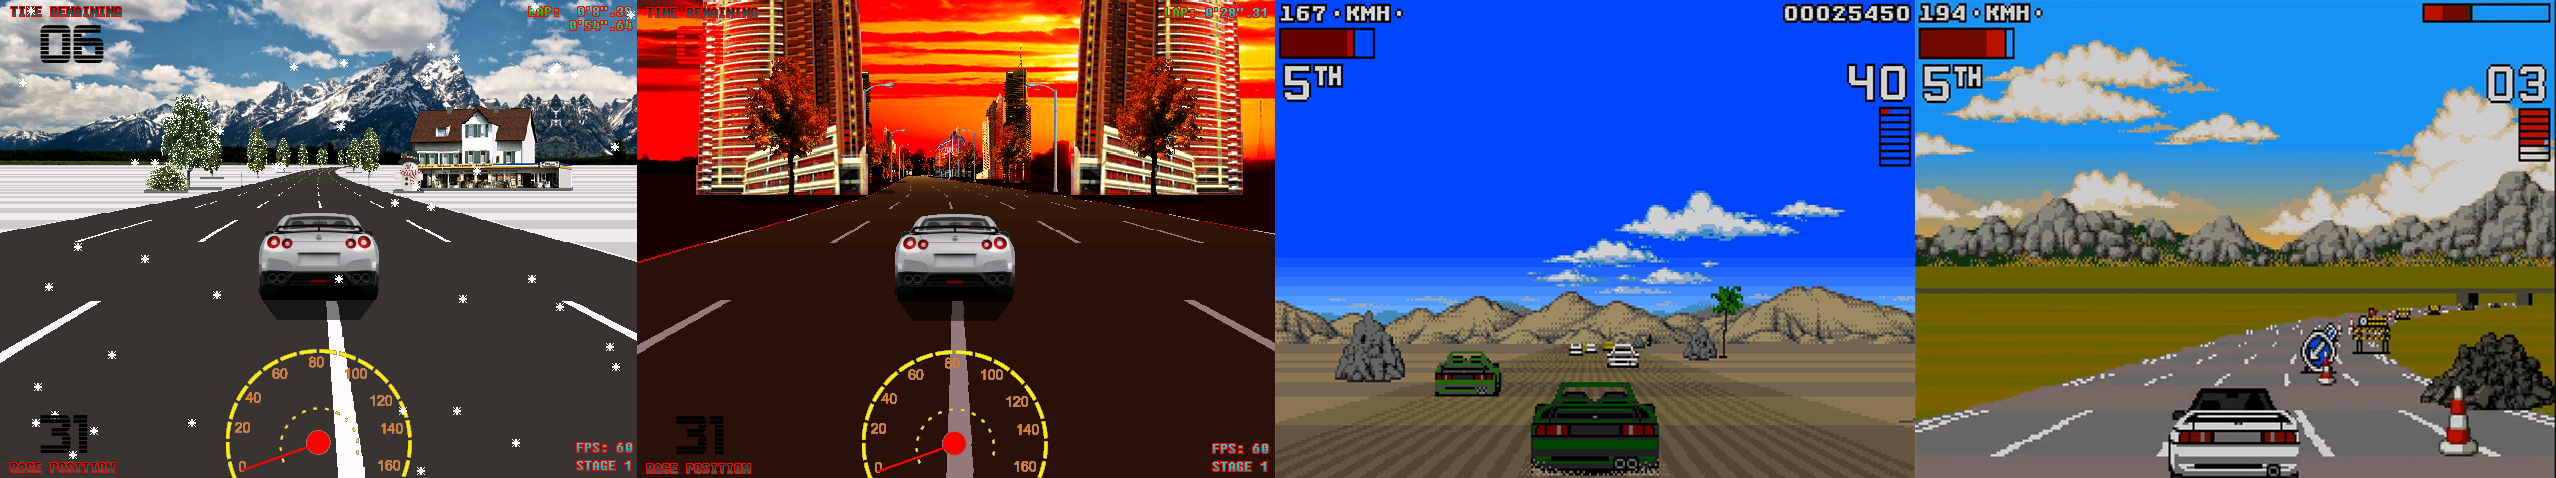 Amiga Racer vs Lotus III